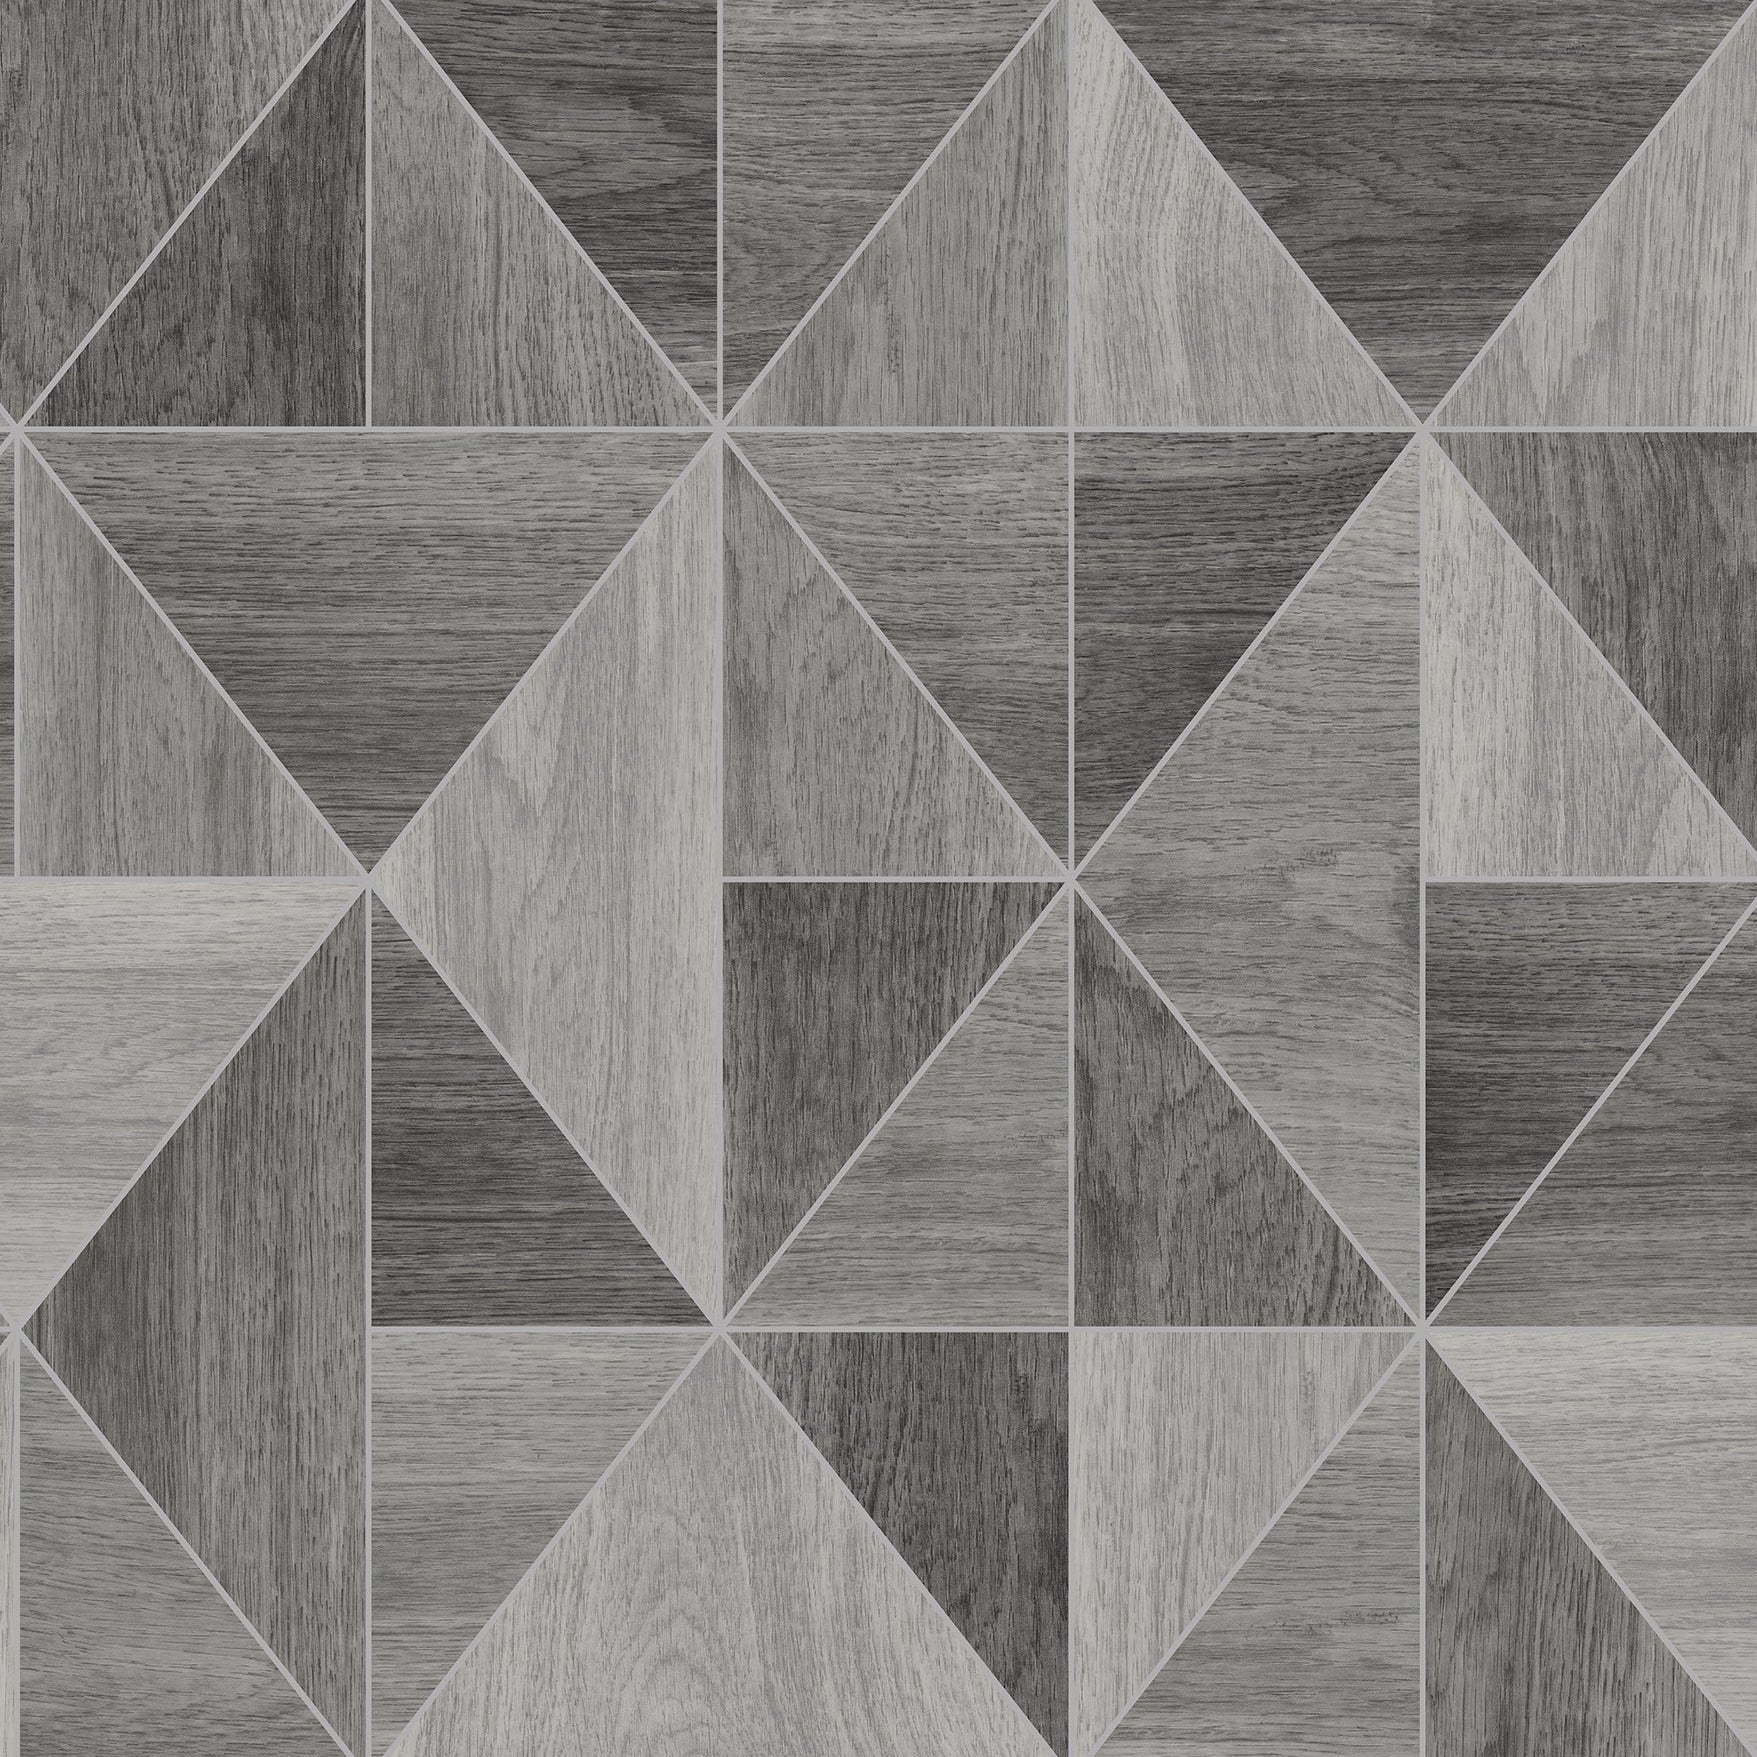 Acquire 2836-24963 Shades of Grey Greys Geometrics Wallpaper by Advantage